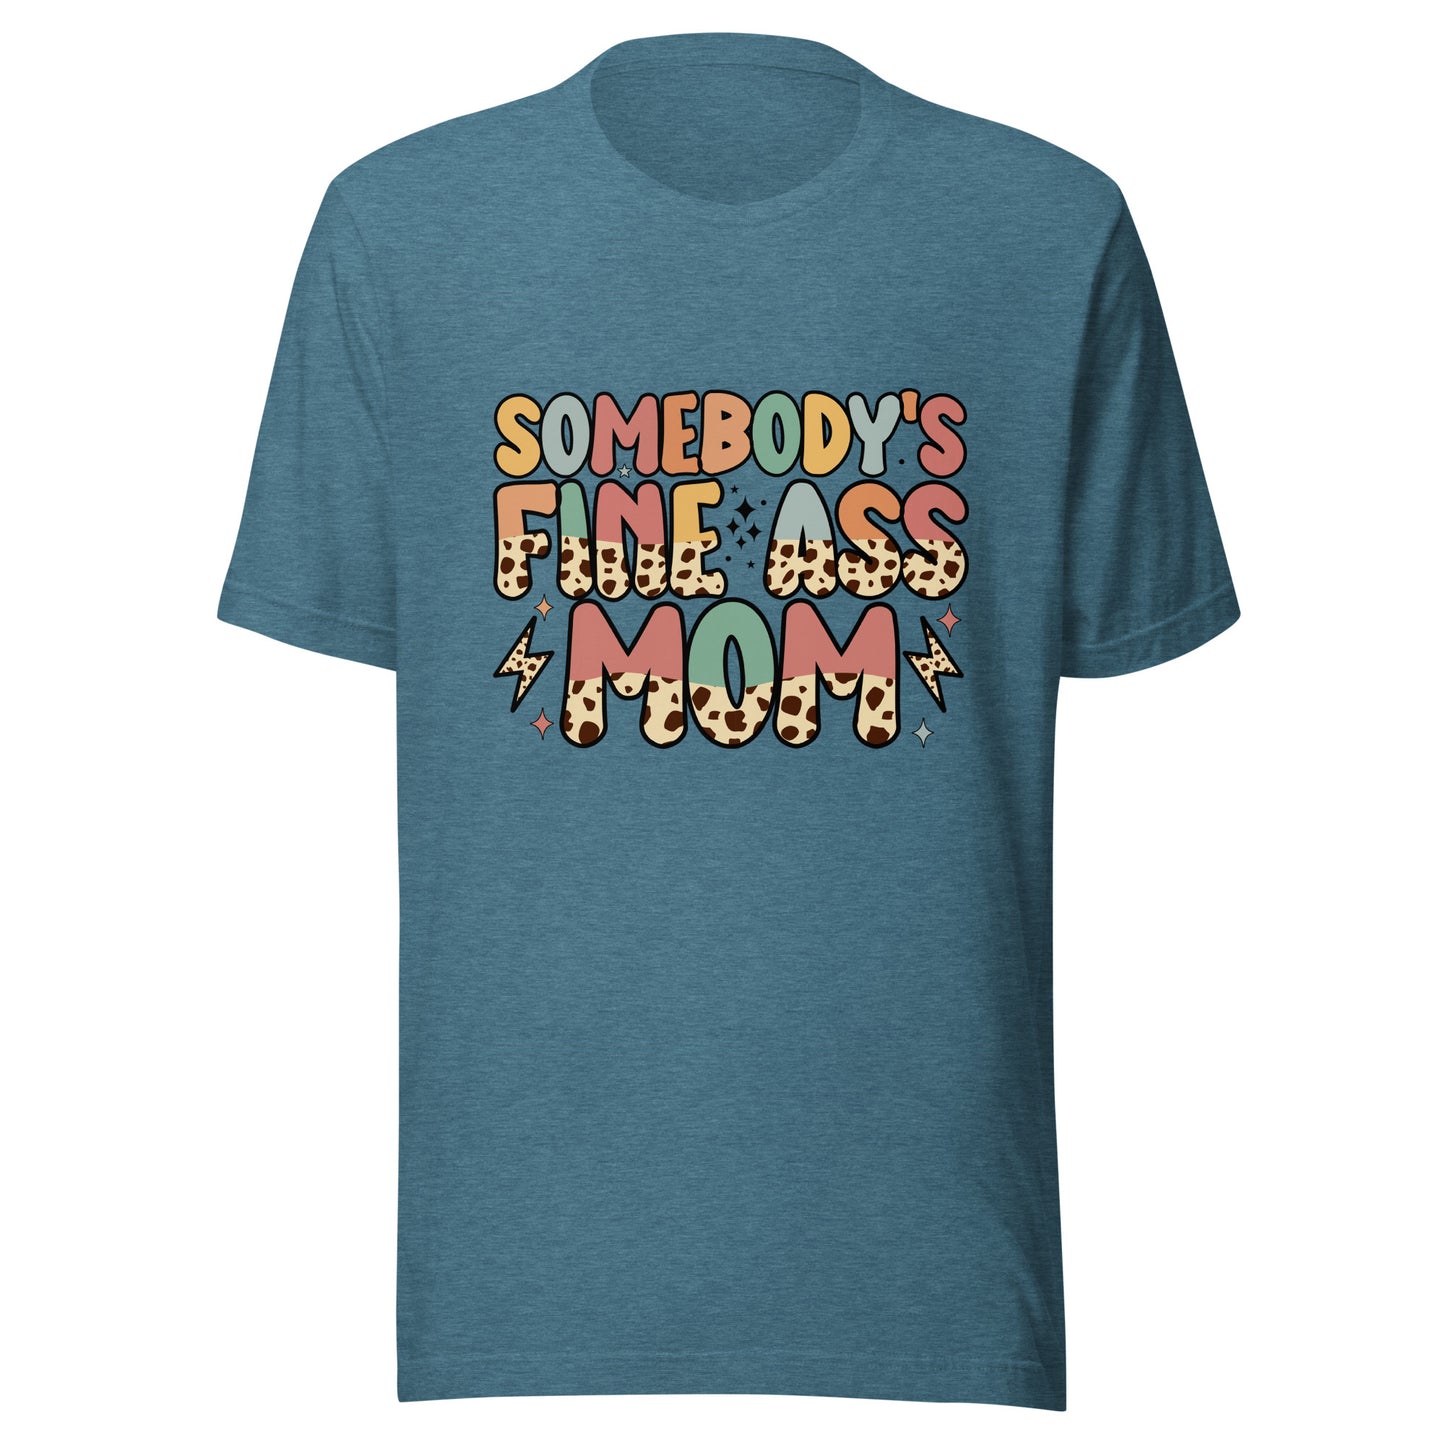 Somebody's fine ass mom  t-shirt